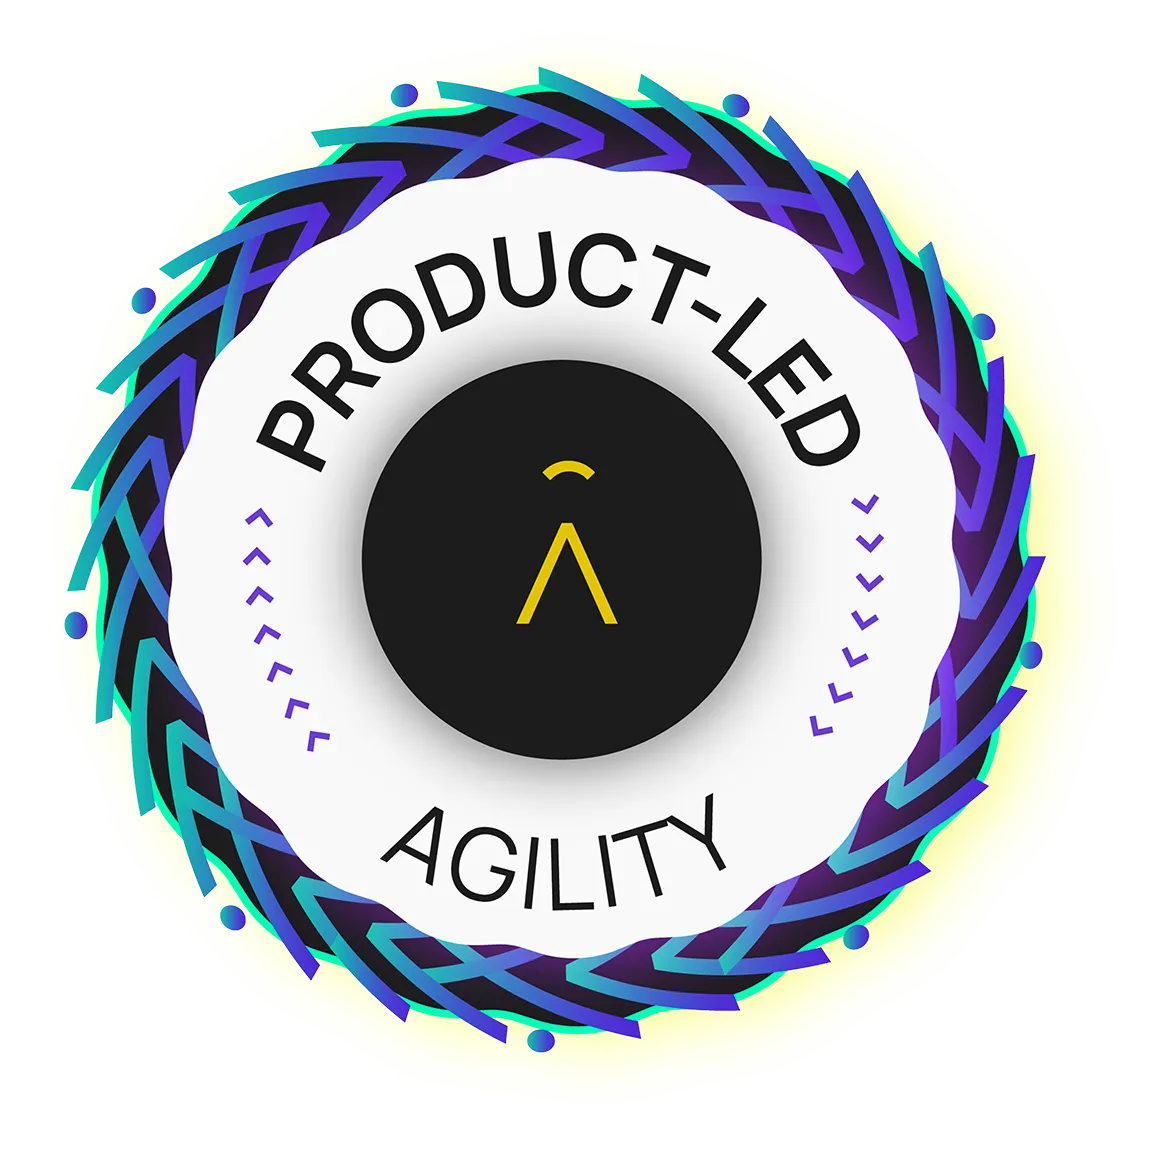 Product-Led Agility